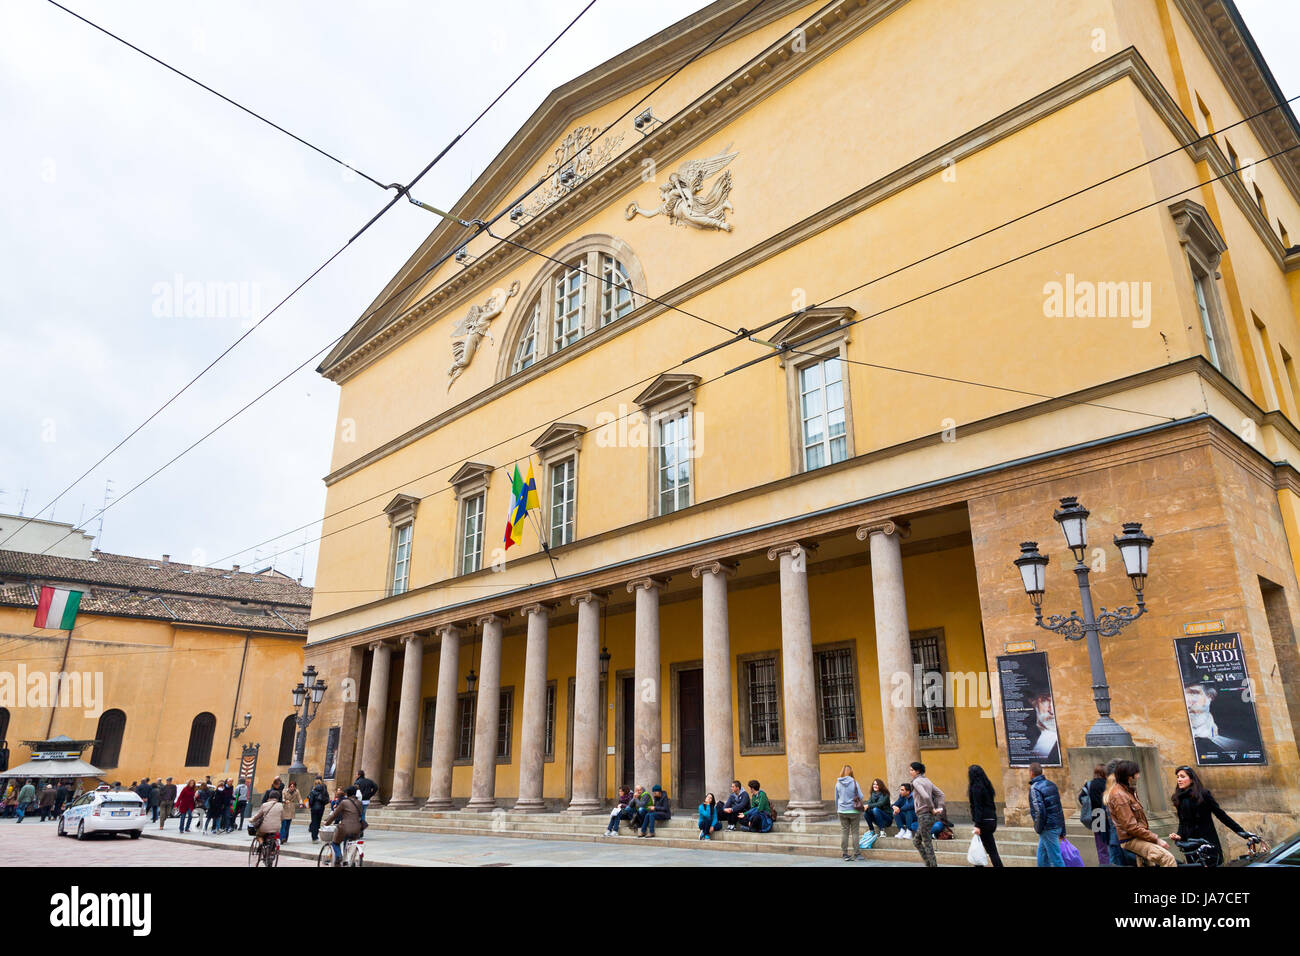 PARMA, ITALY - NOVEMBER 3: Teatro Regio di Parma - famous opera house. Since 2004 it has mounted an annual autumn 'Festival Verdi' in Parma, Italy on November 3, 2012 Stock Photo